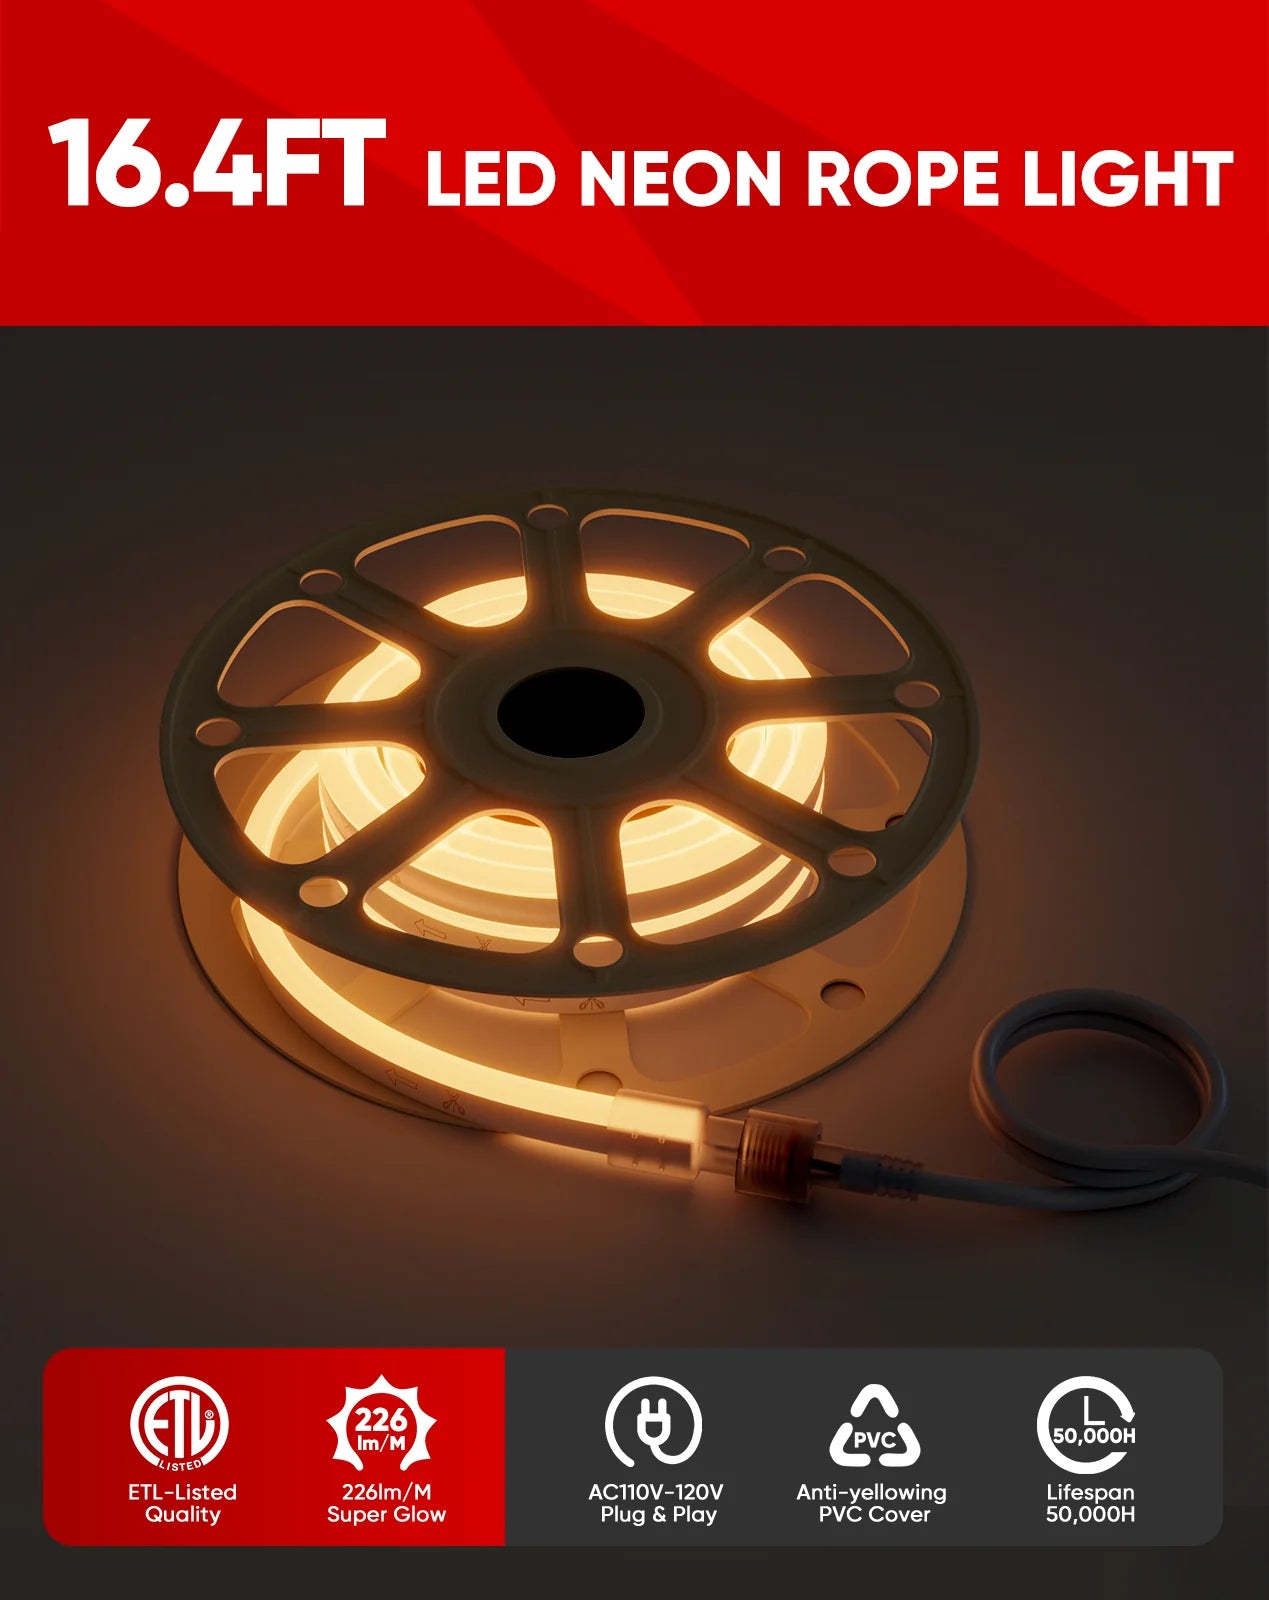 Super Bright Lum LED Neon Rope Light - 110V 2500K Warm White - 226 Lumens - Flexible, Durable, and Energy-Efficient - Eco LED Lightings 